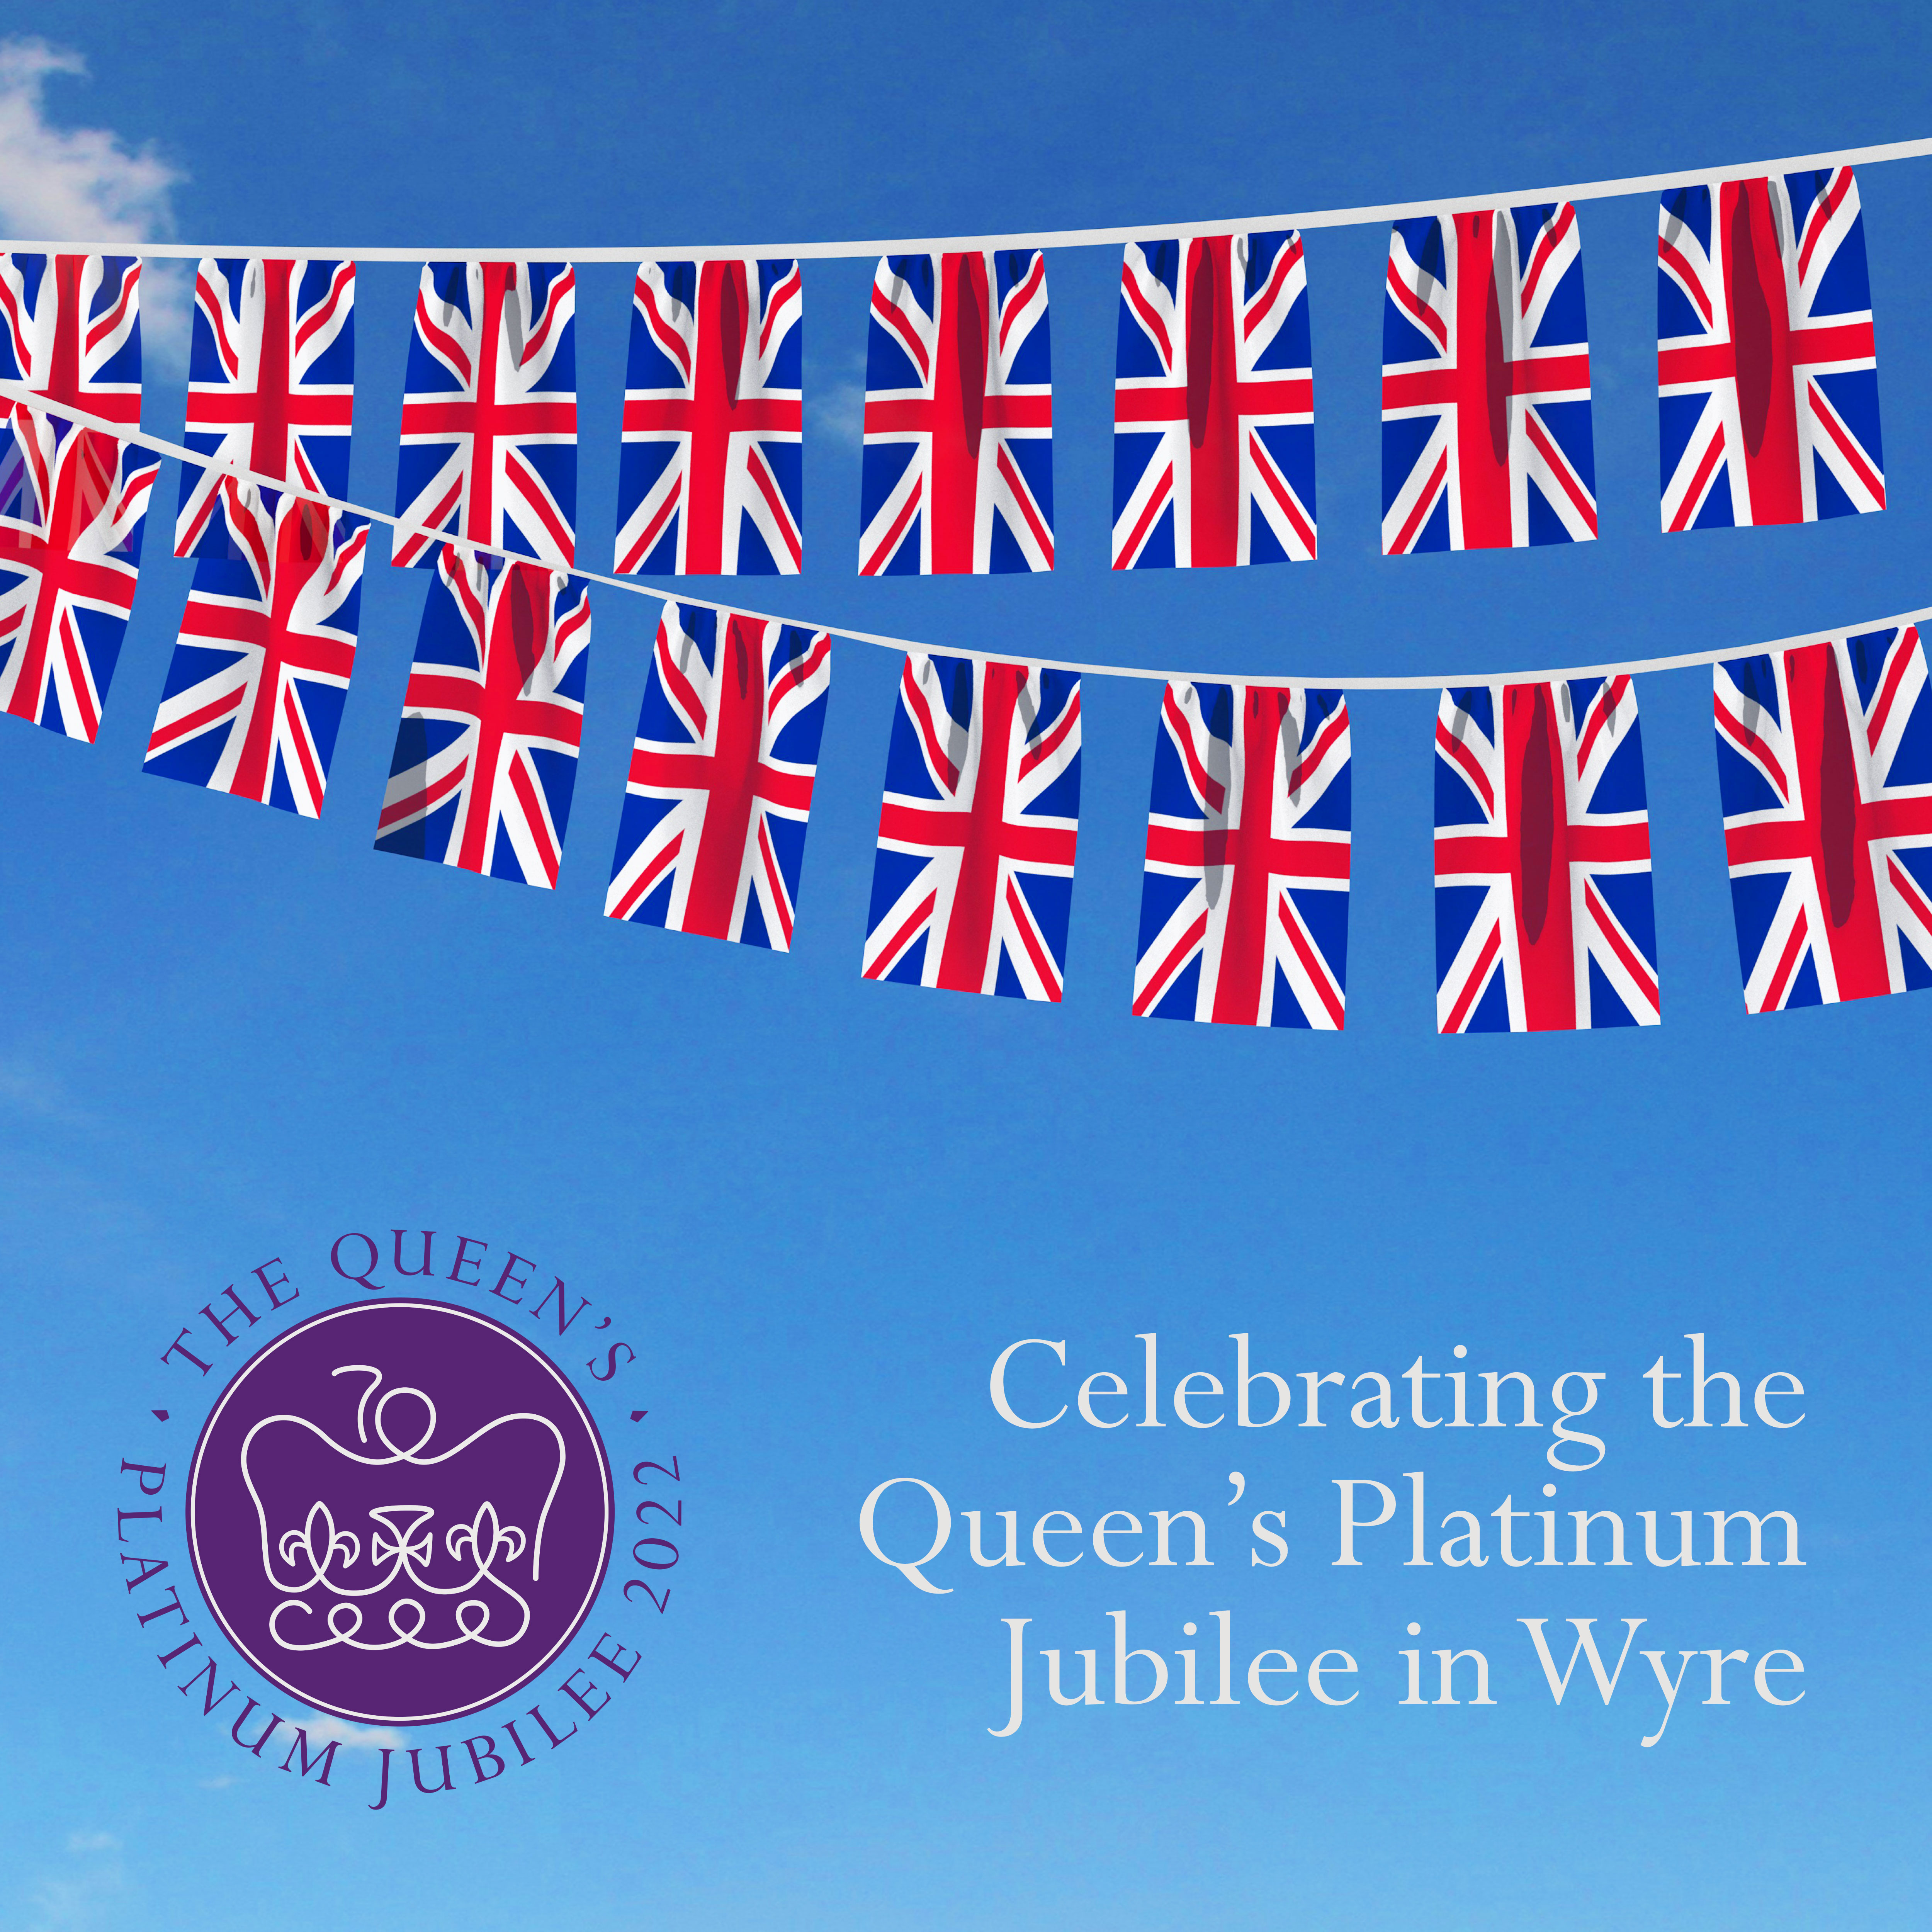 Platinum jubilee celebration image with bunting